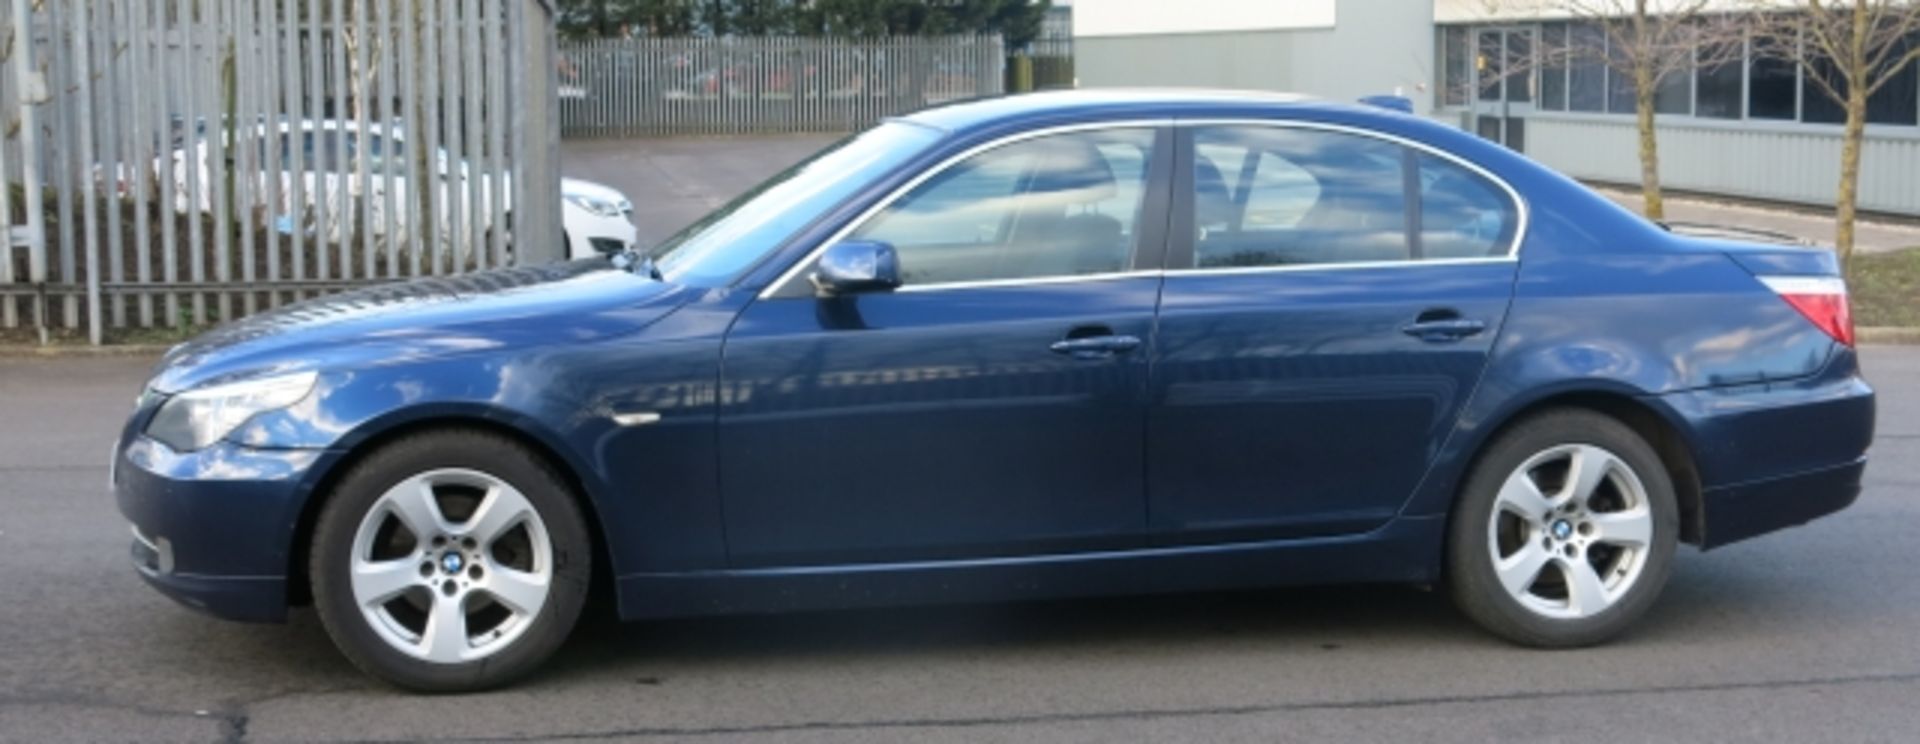 (57) BMW 520D SE Saloon Car; diesel 1995cc; registration YY57 VBA; 148884 recorded miles; tested - Image 7 of 19